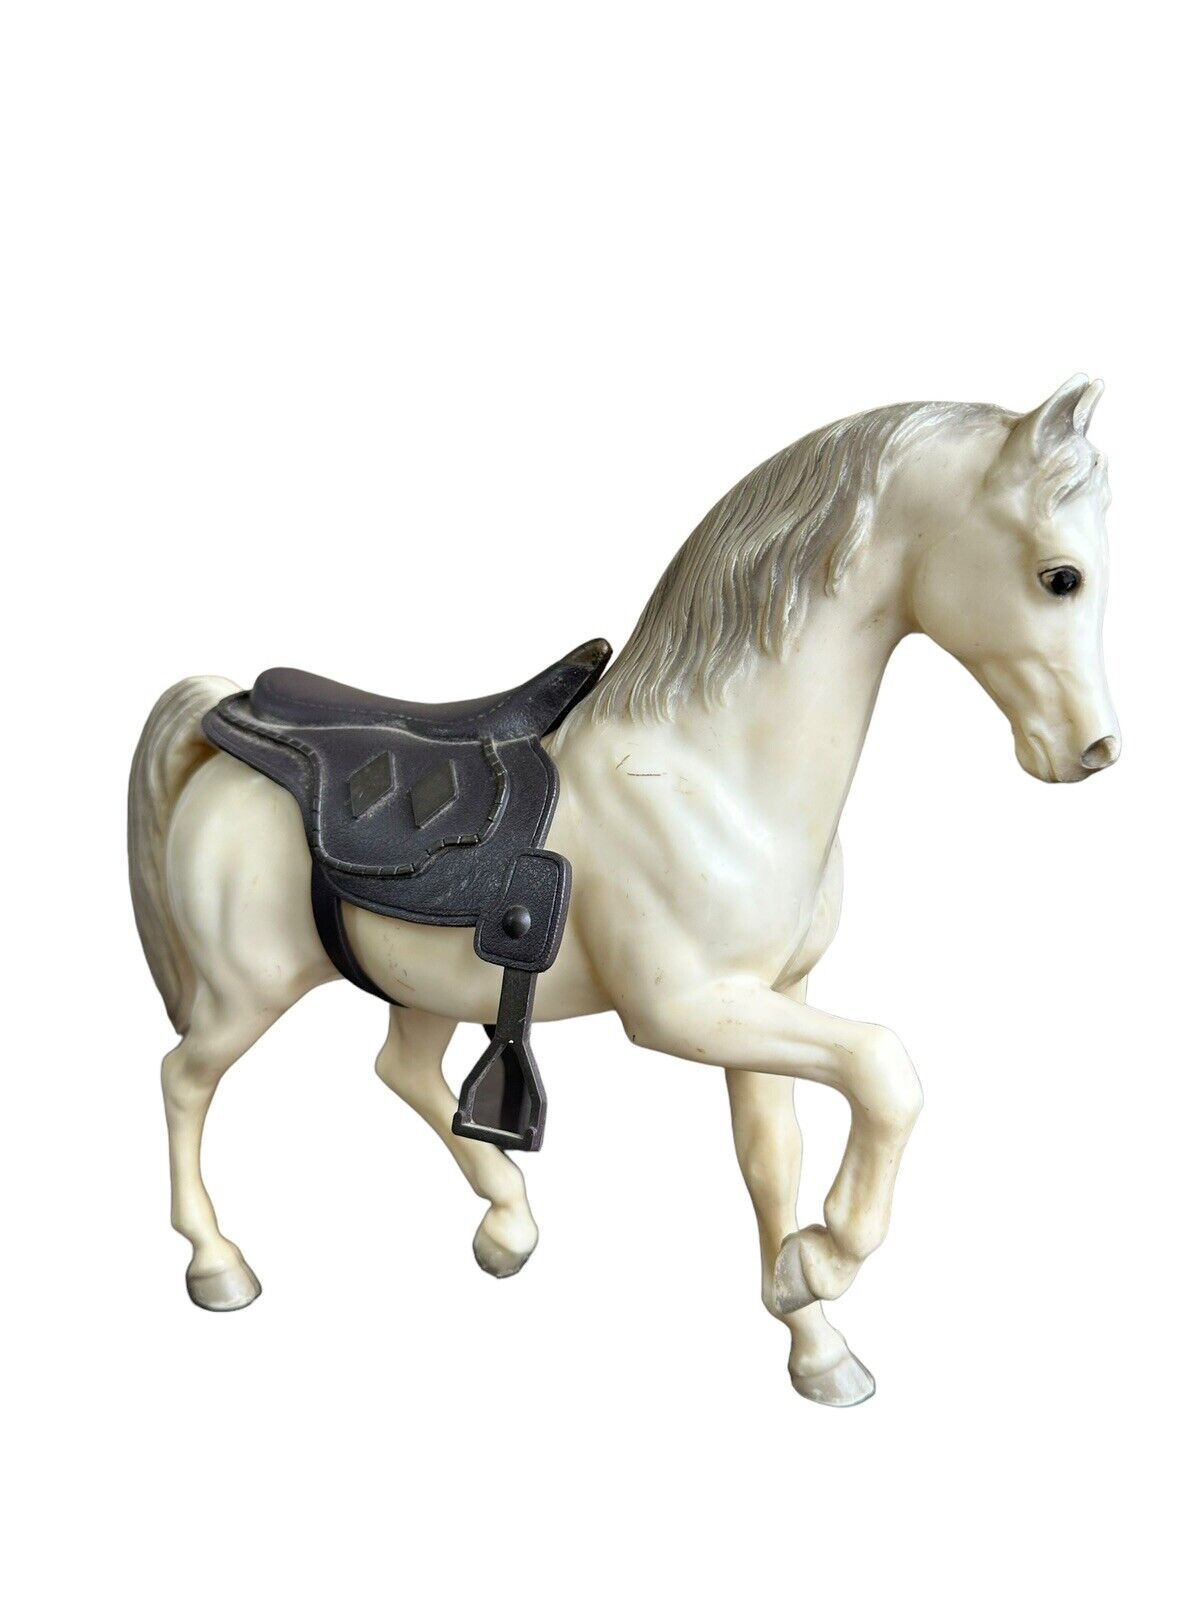 Vtg Breyer Horse Family Arabian Stallion #7 “Prince” FAS 1967-1973 W/ Saddle